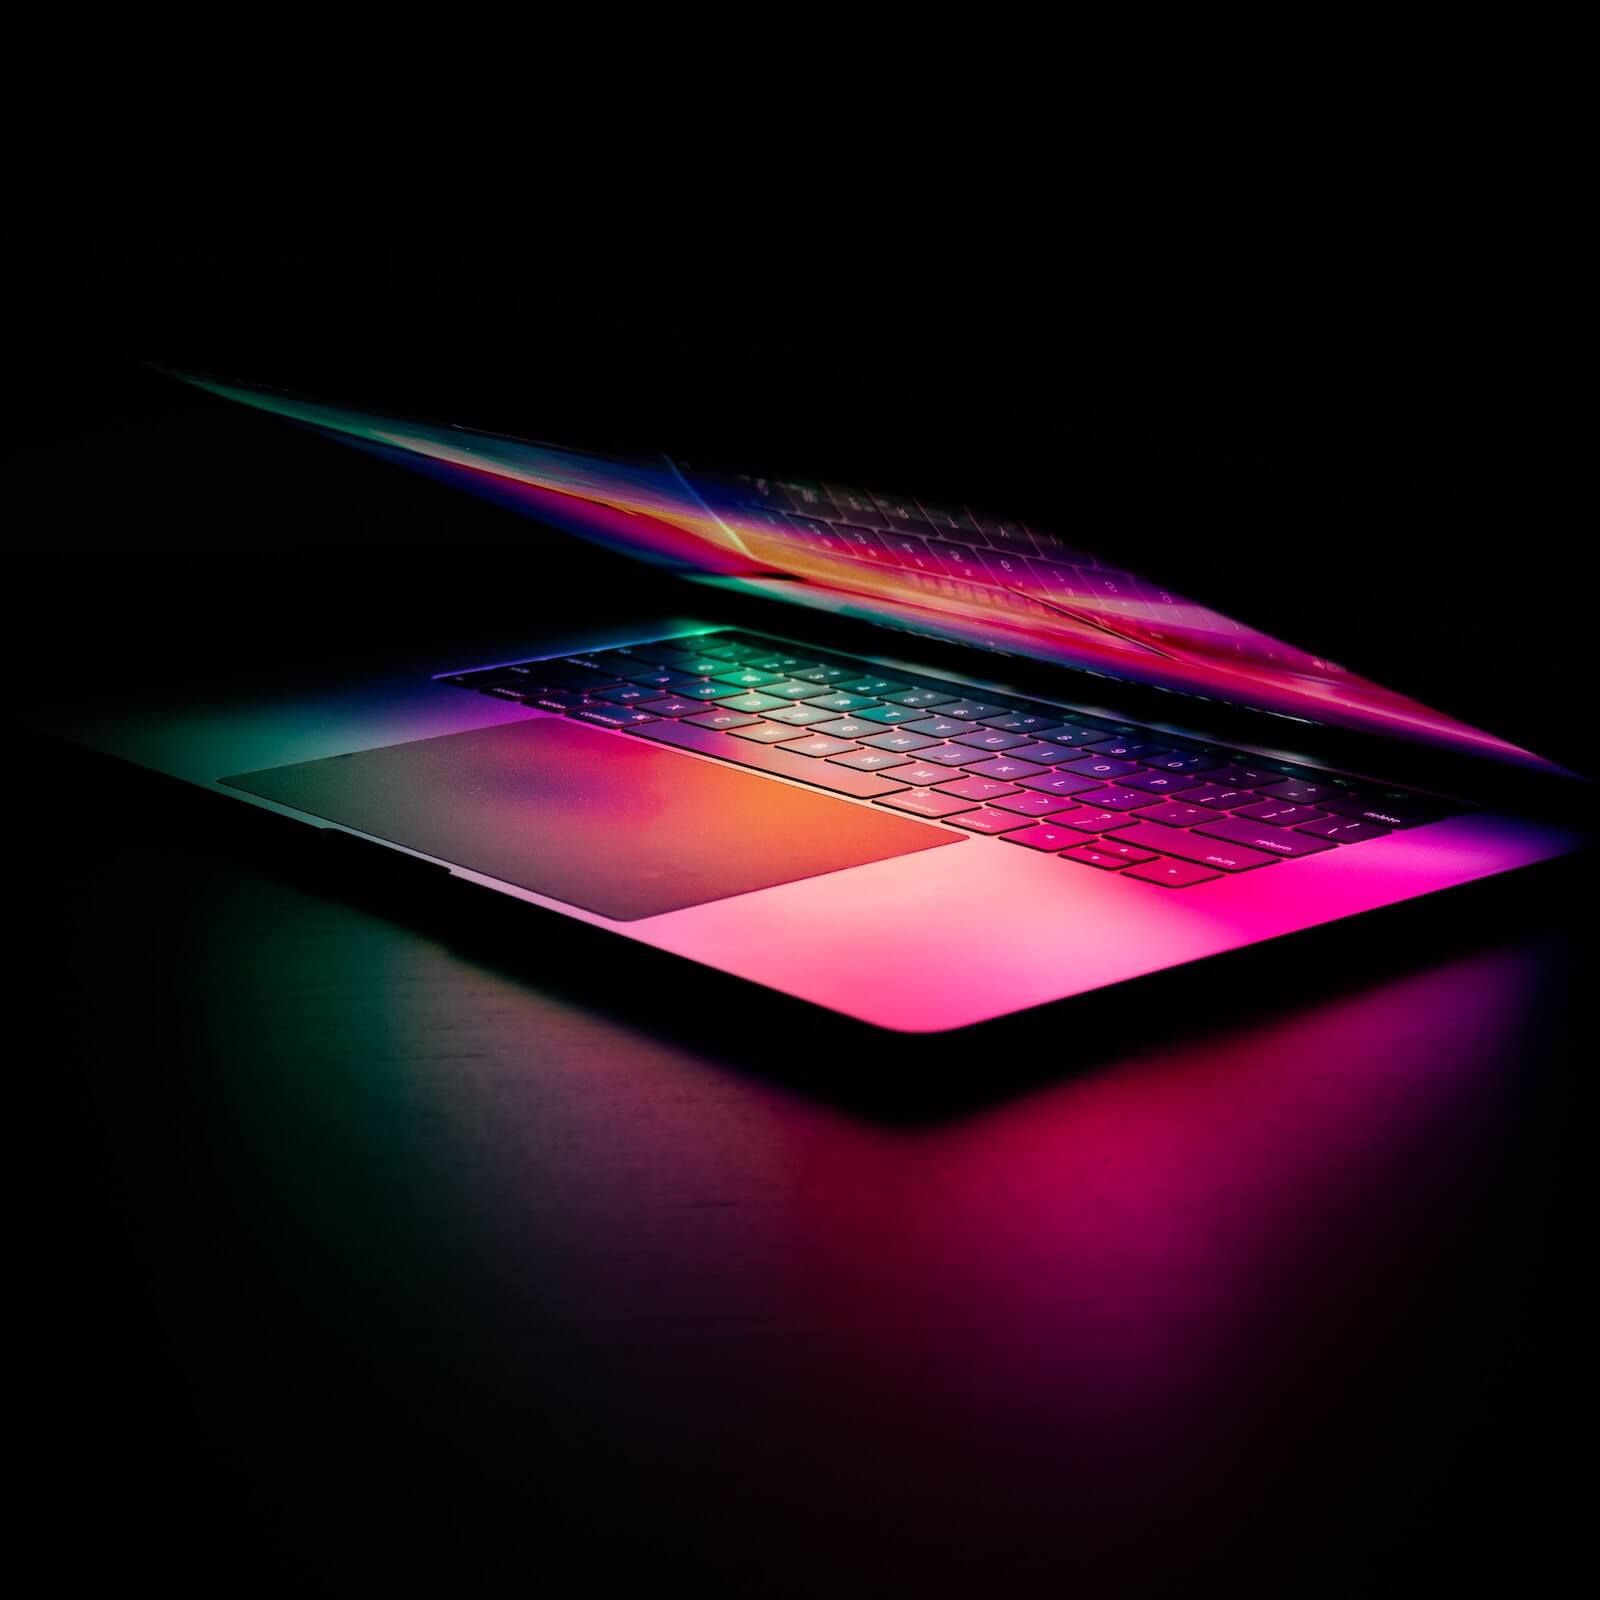 Laptop against a black background